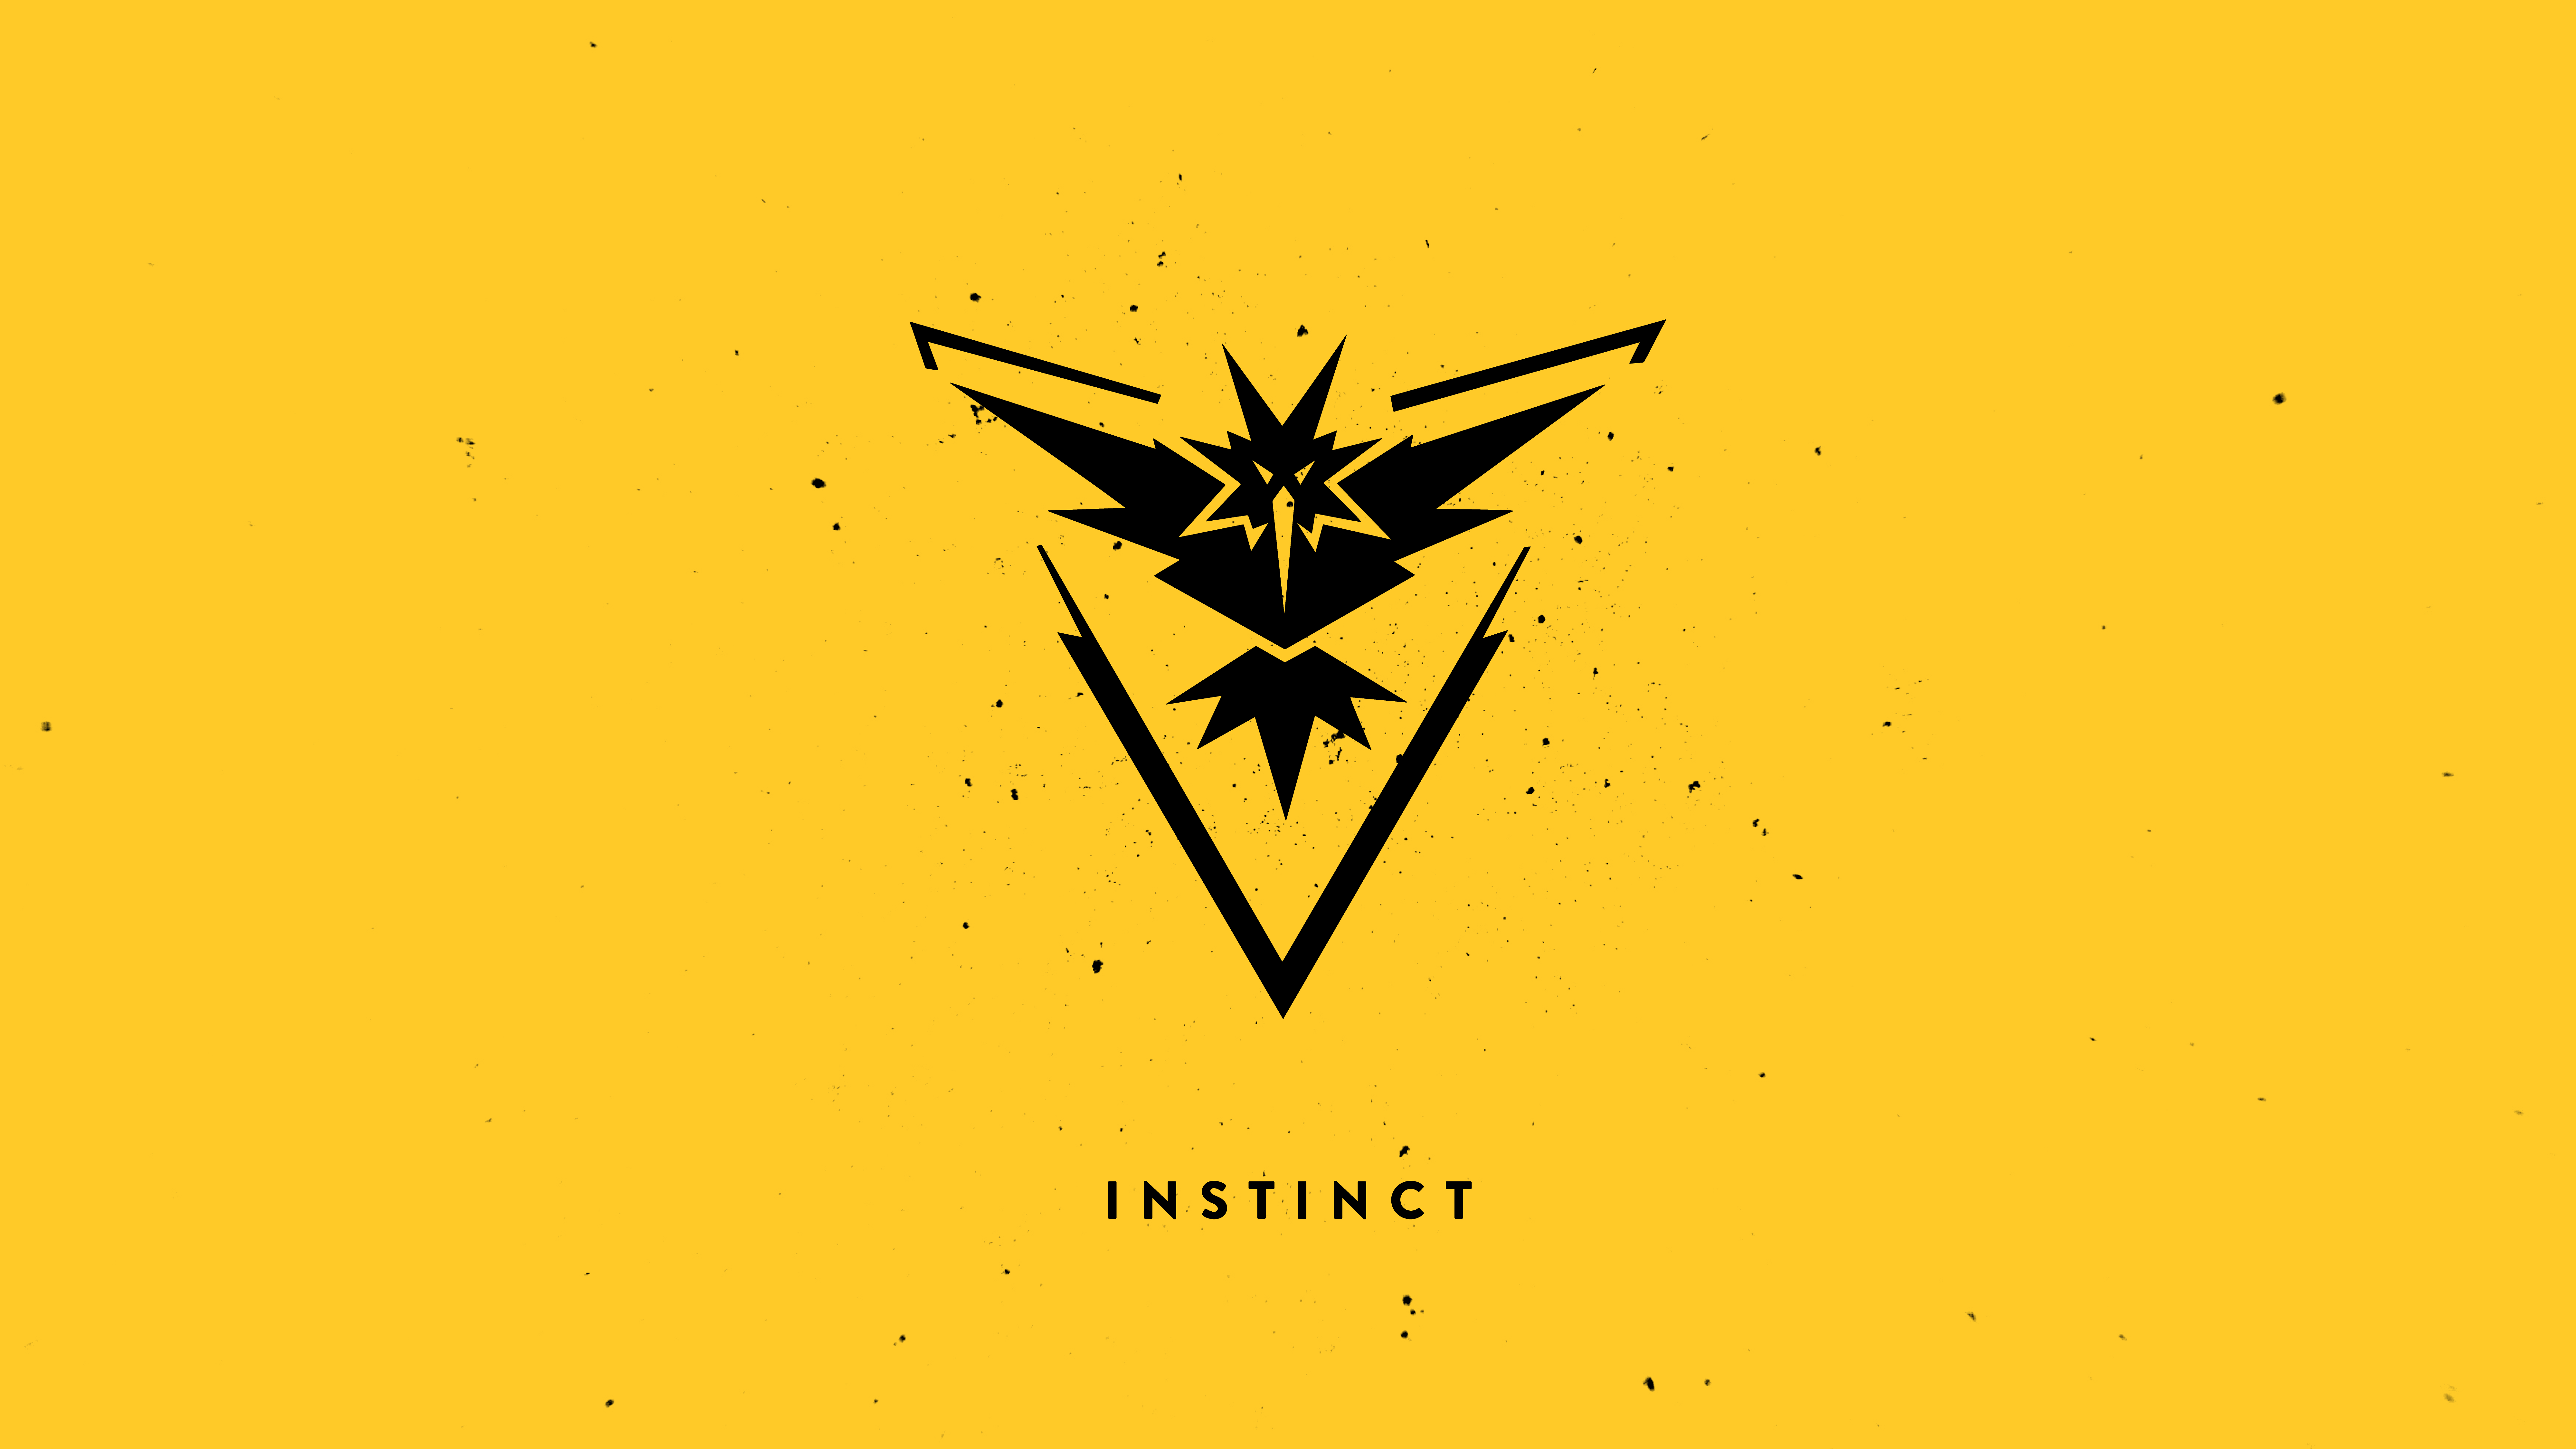 Team Instinct Wallpapers - Album on Imgur